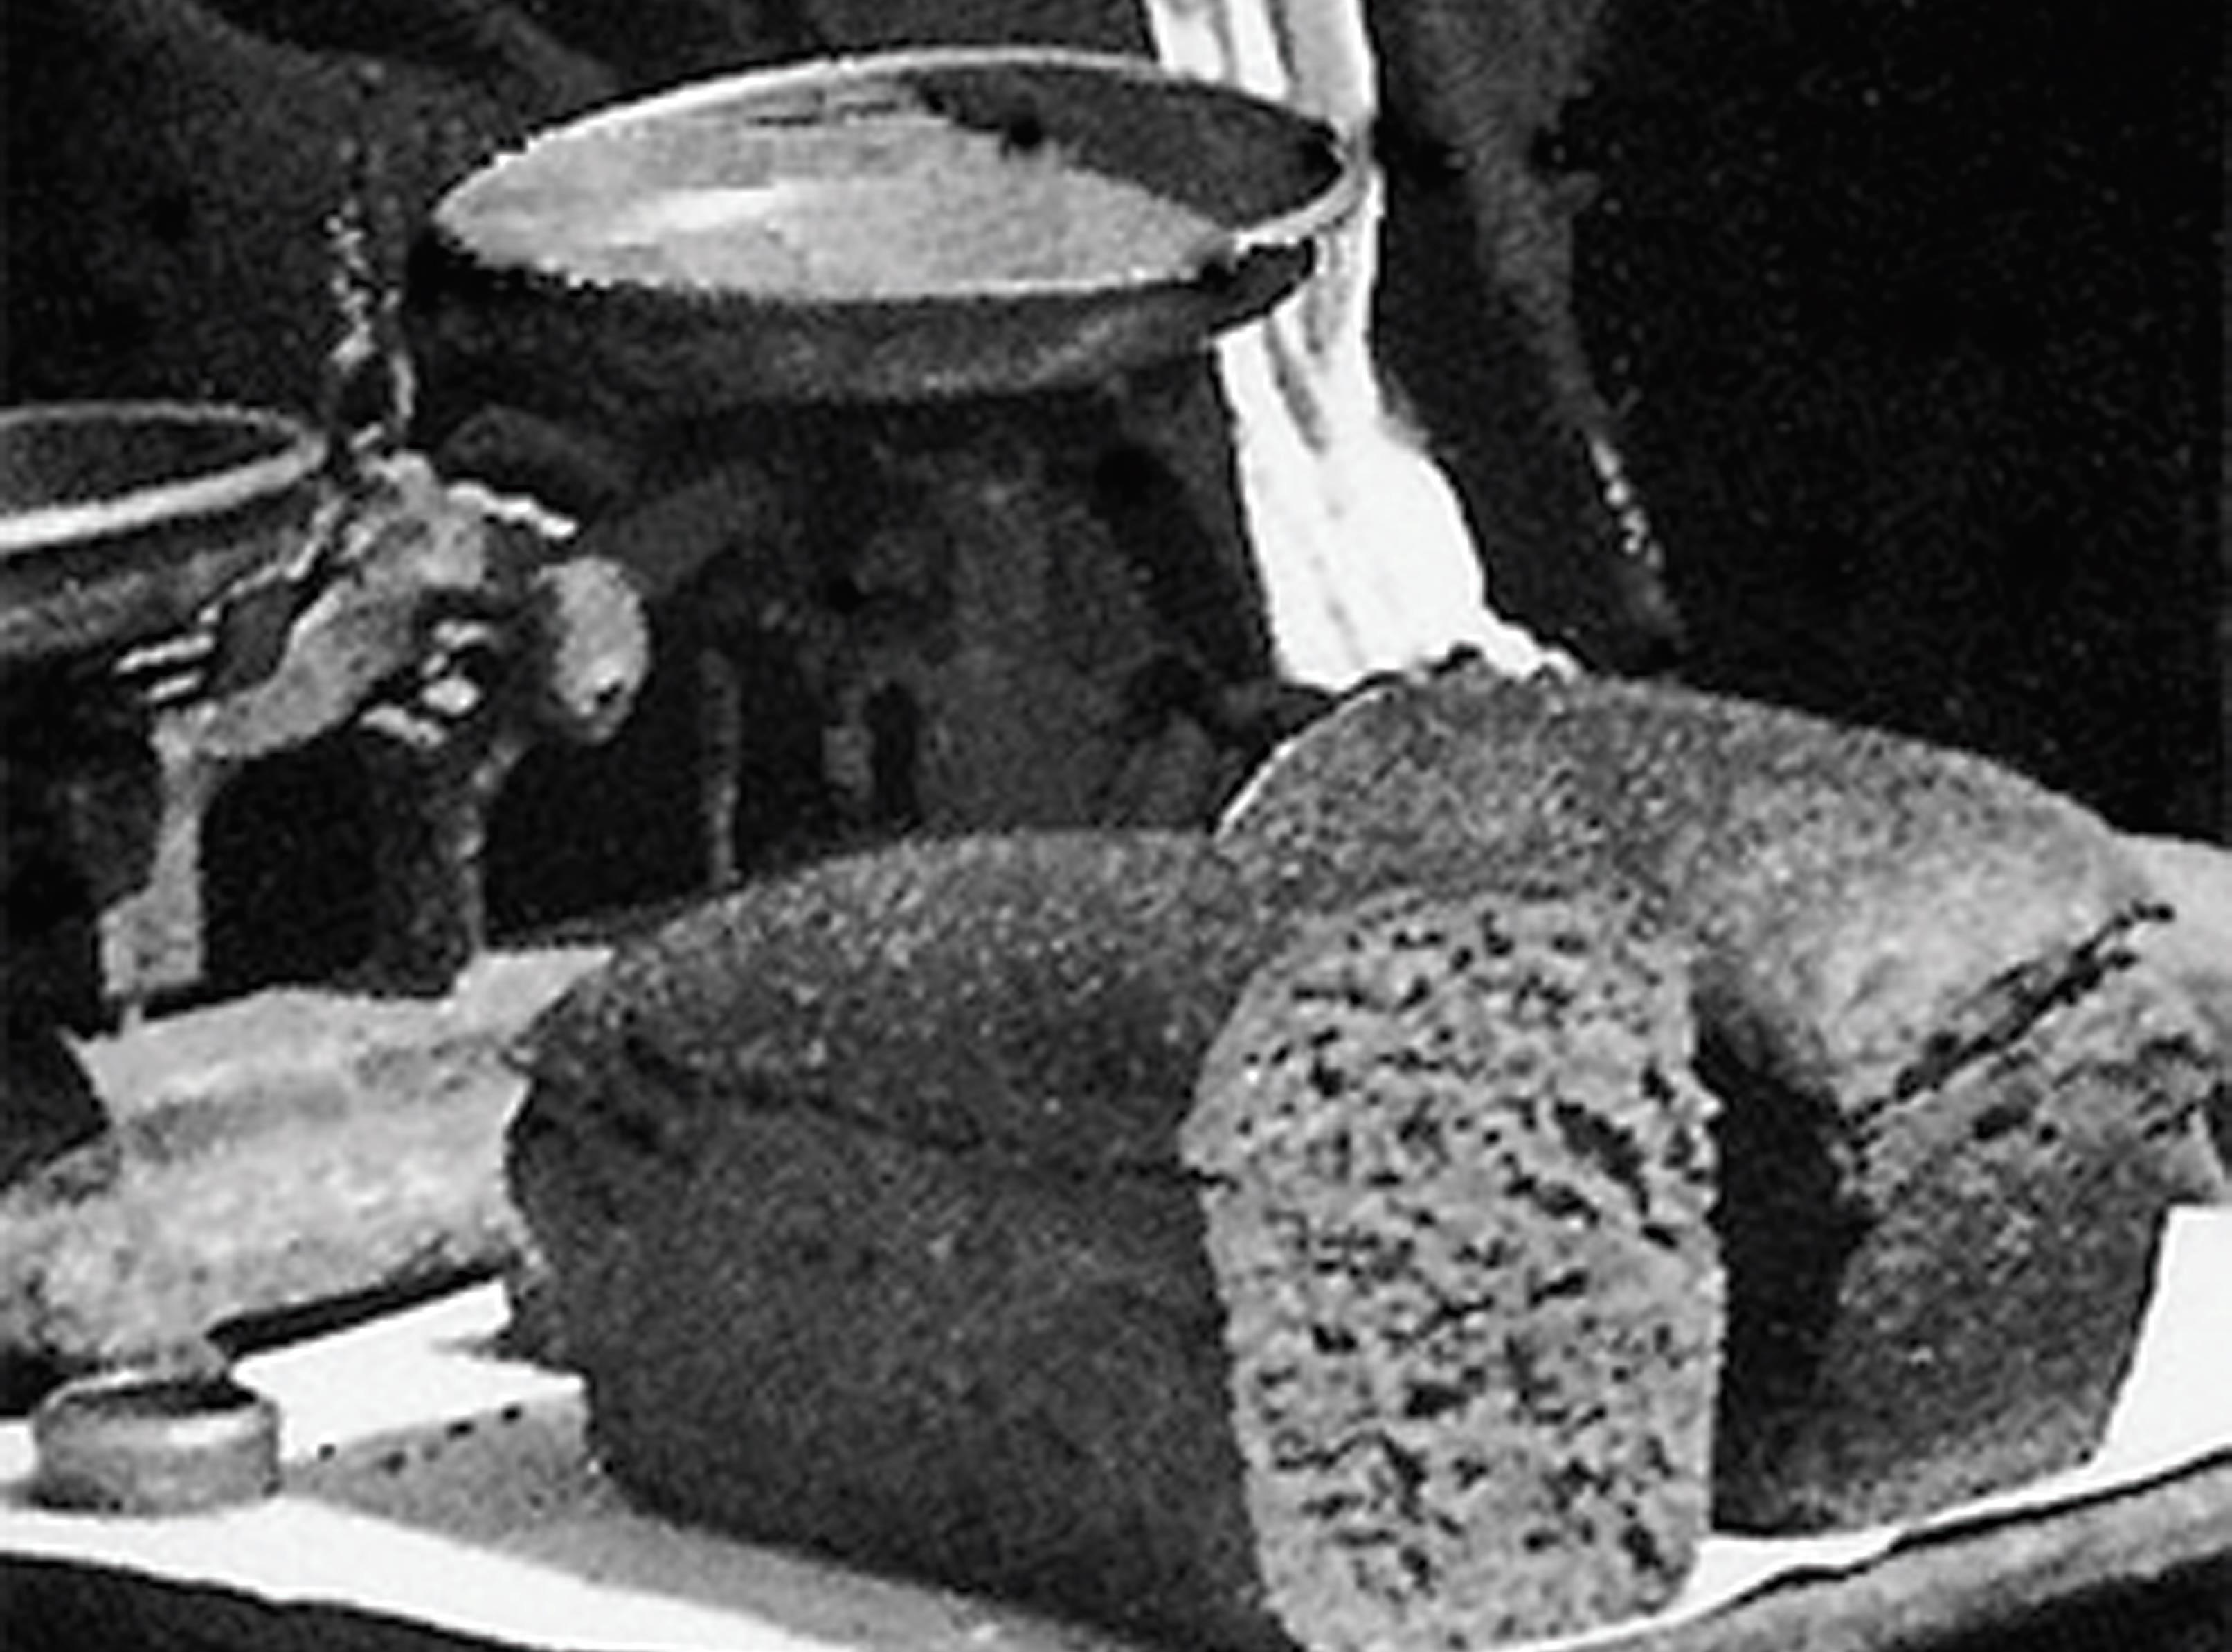 Bread ration